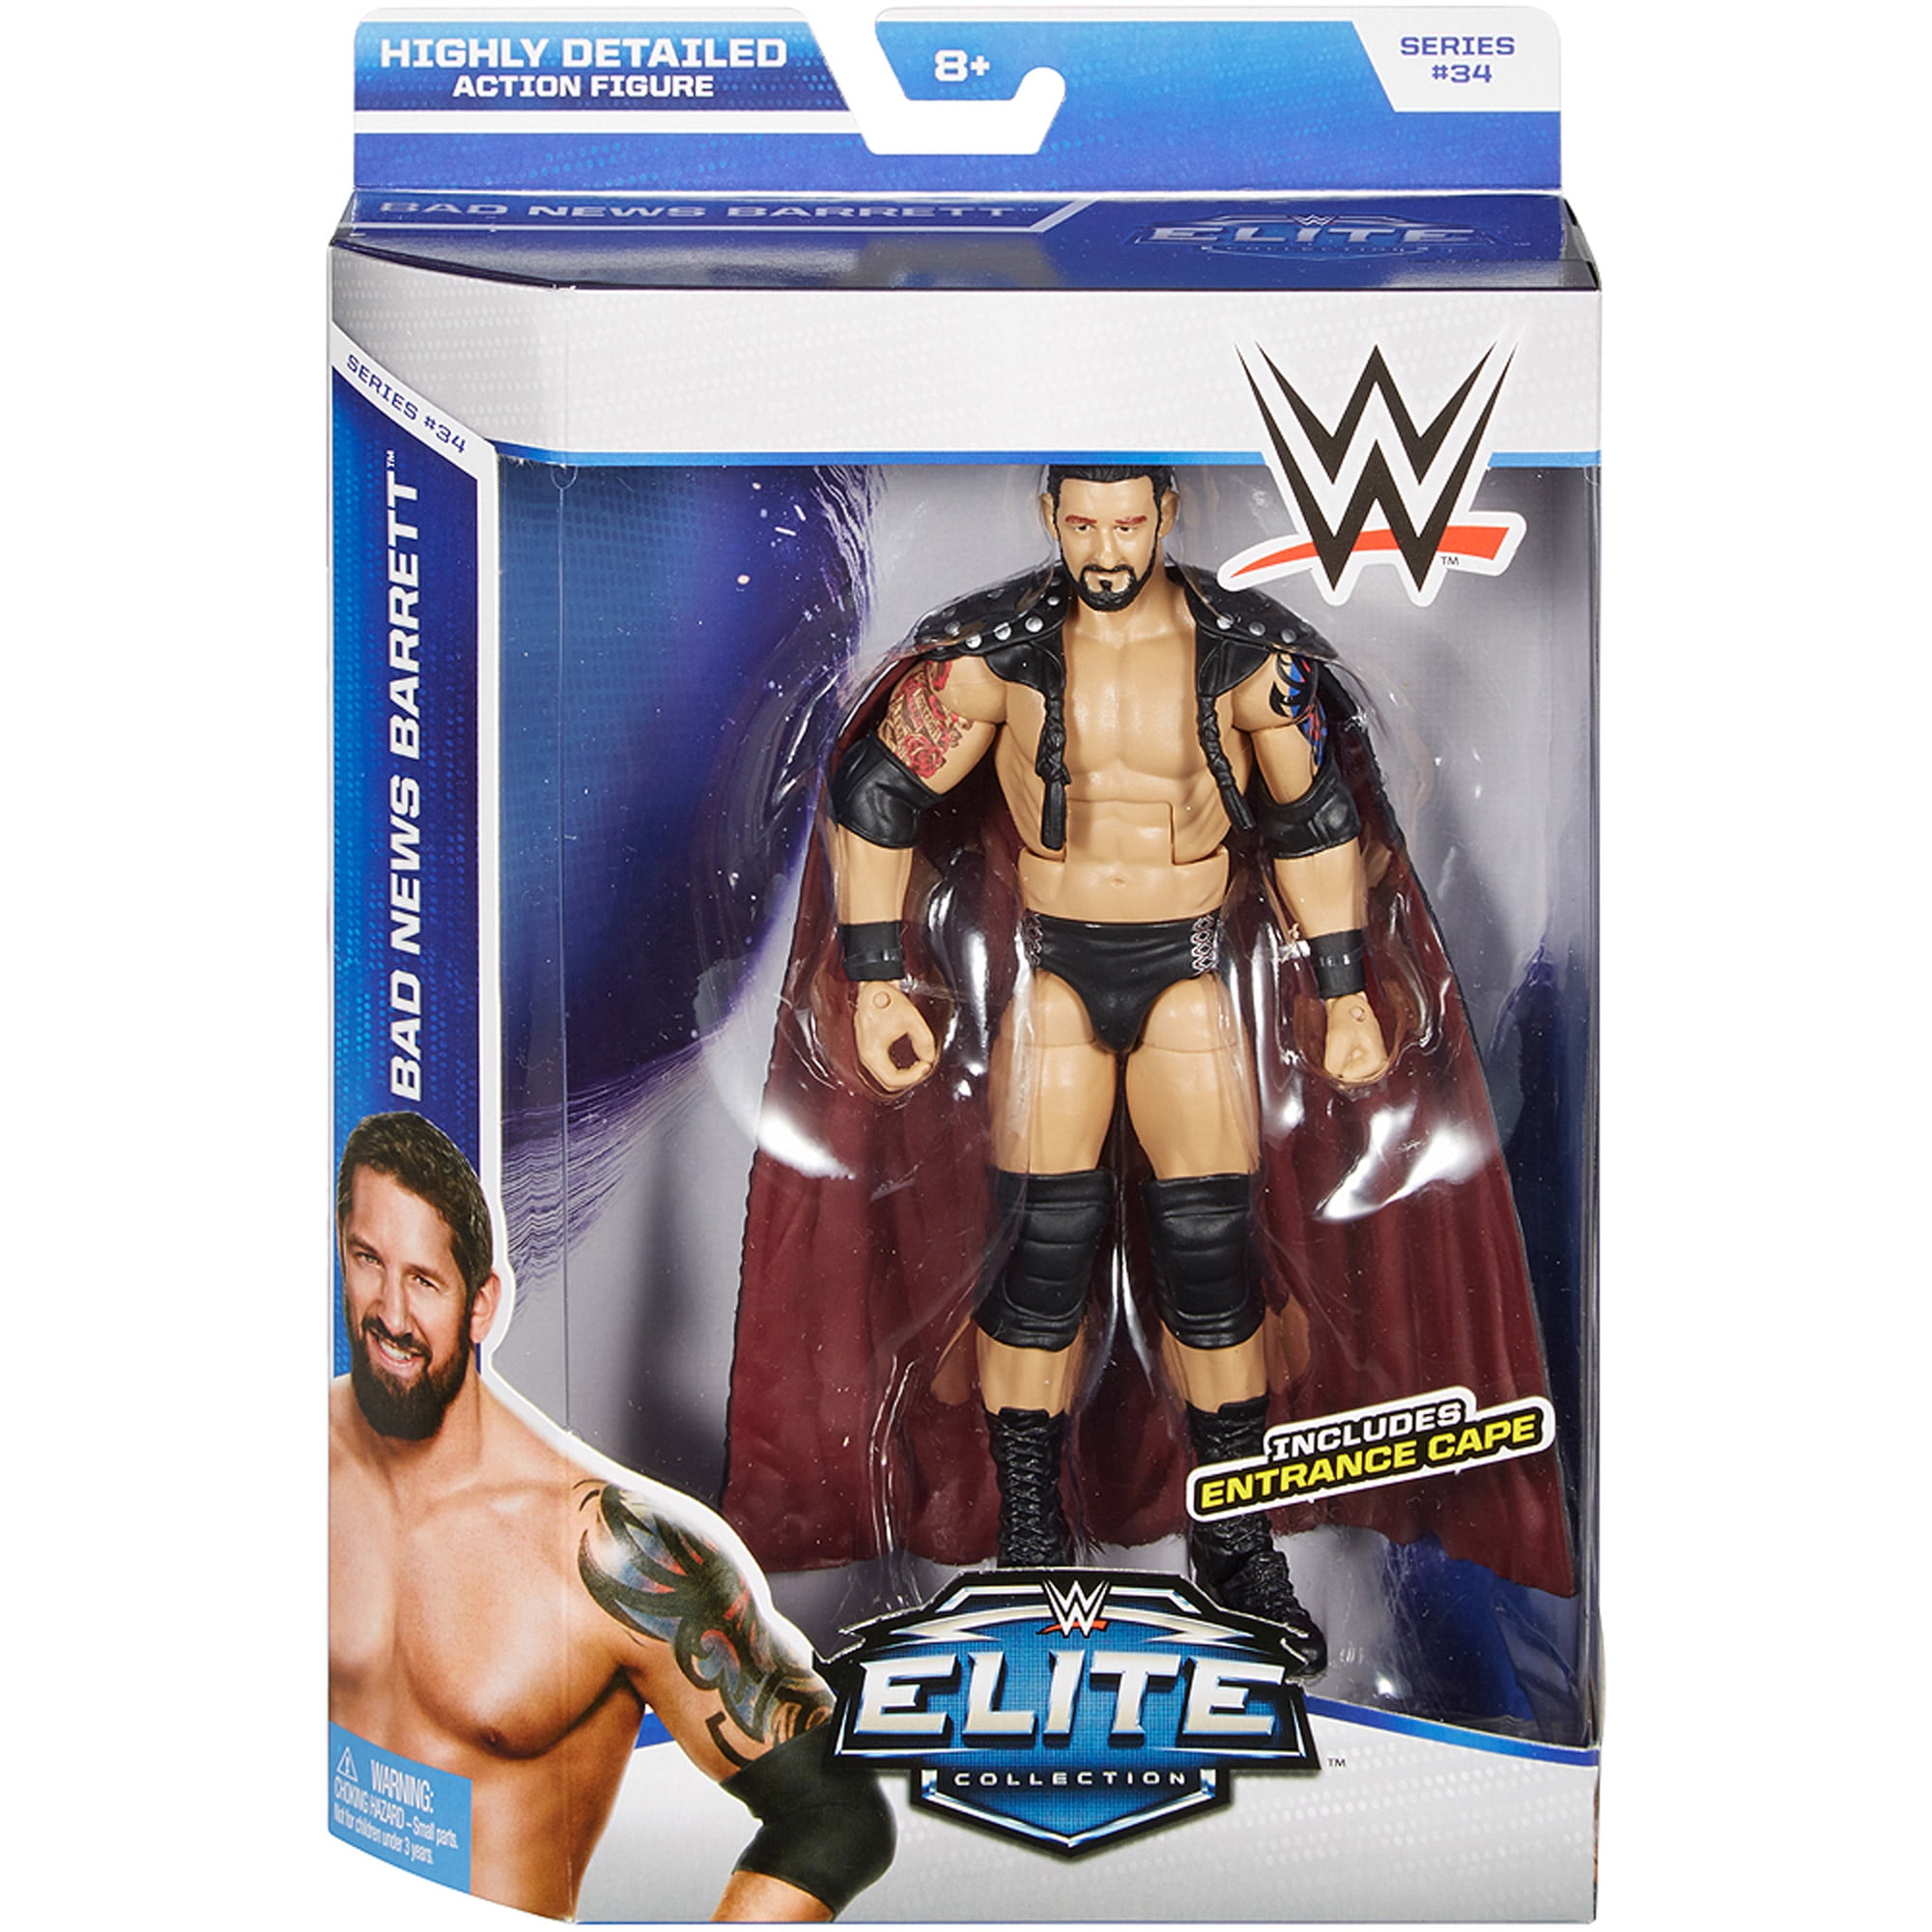 Bad News Barrett Cape Accessories Fodder for WWE Wrestling Figures Mattel 